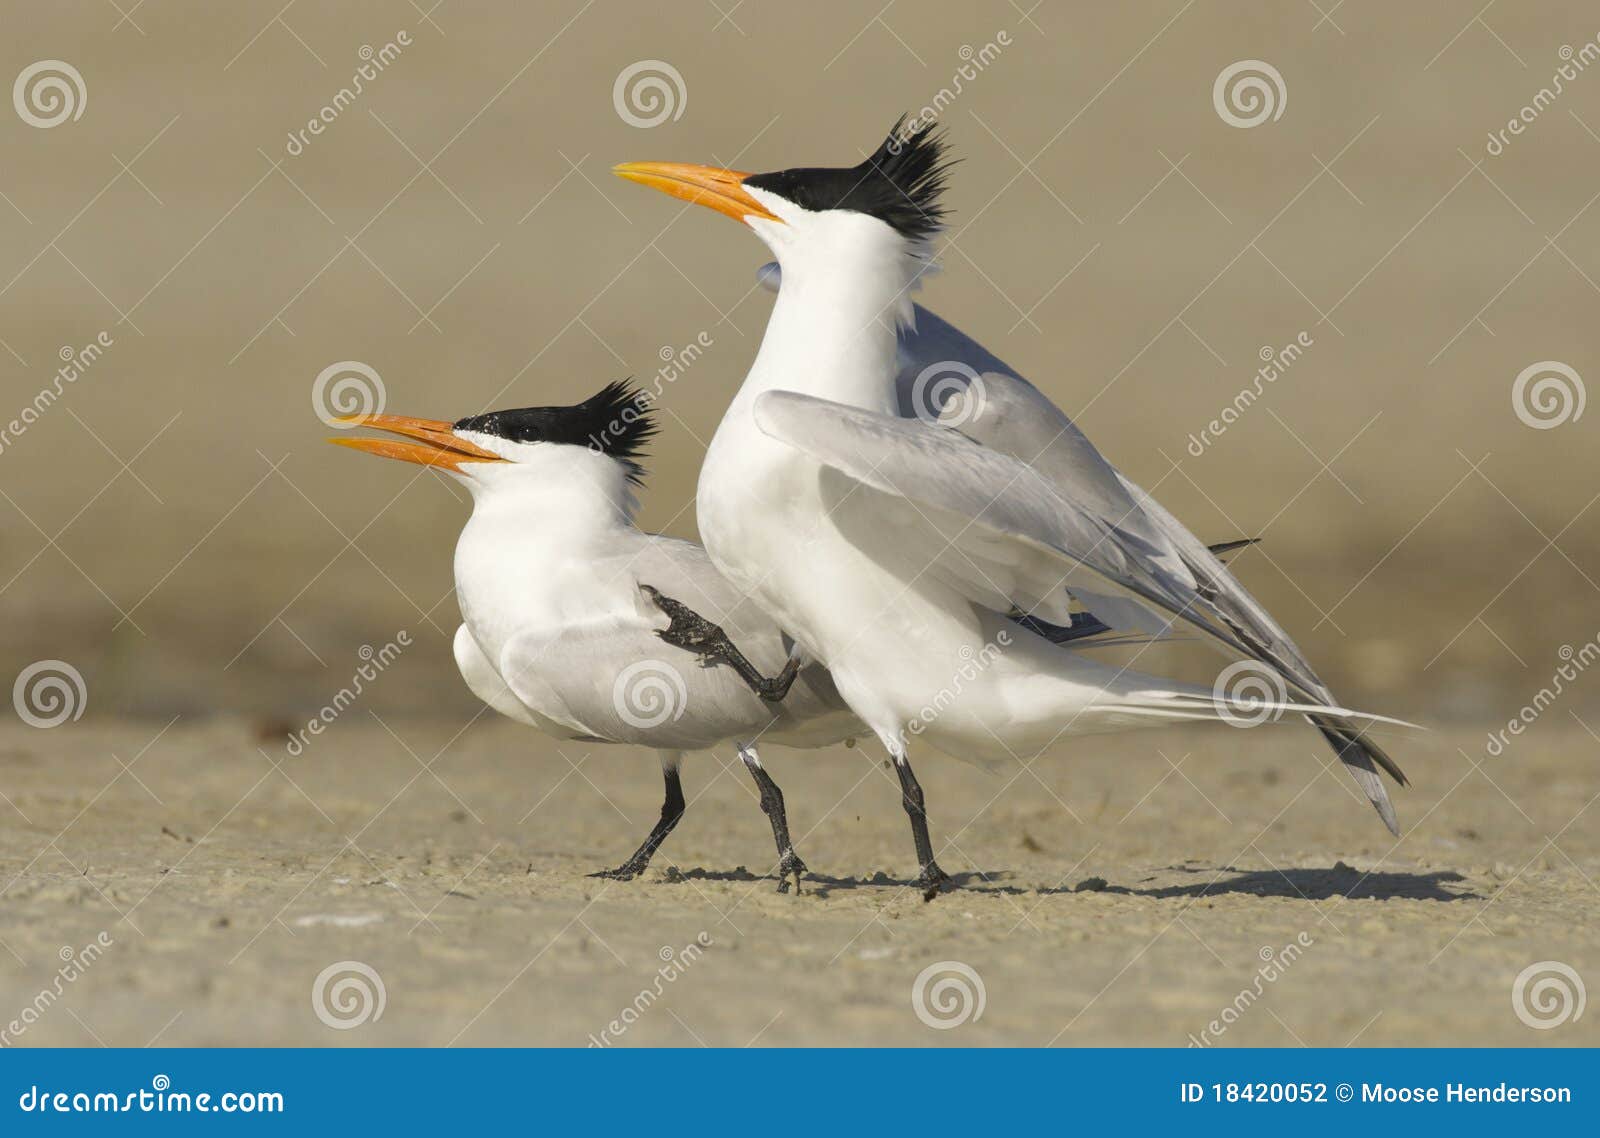 royal tern, sterna maxima